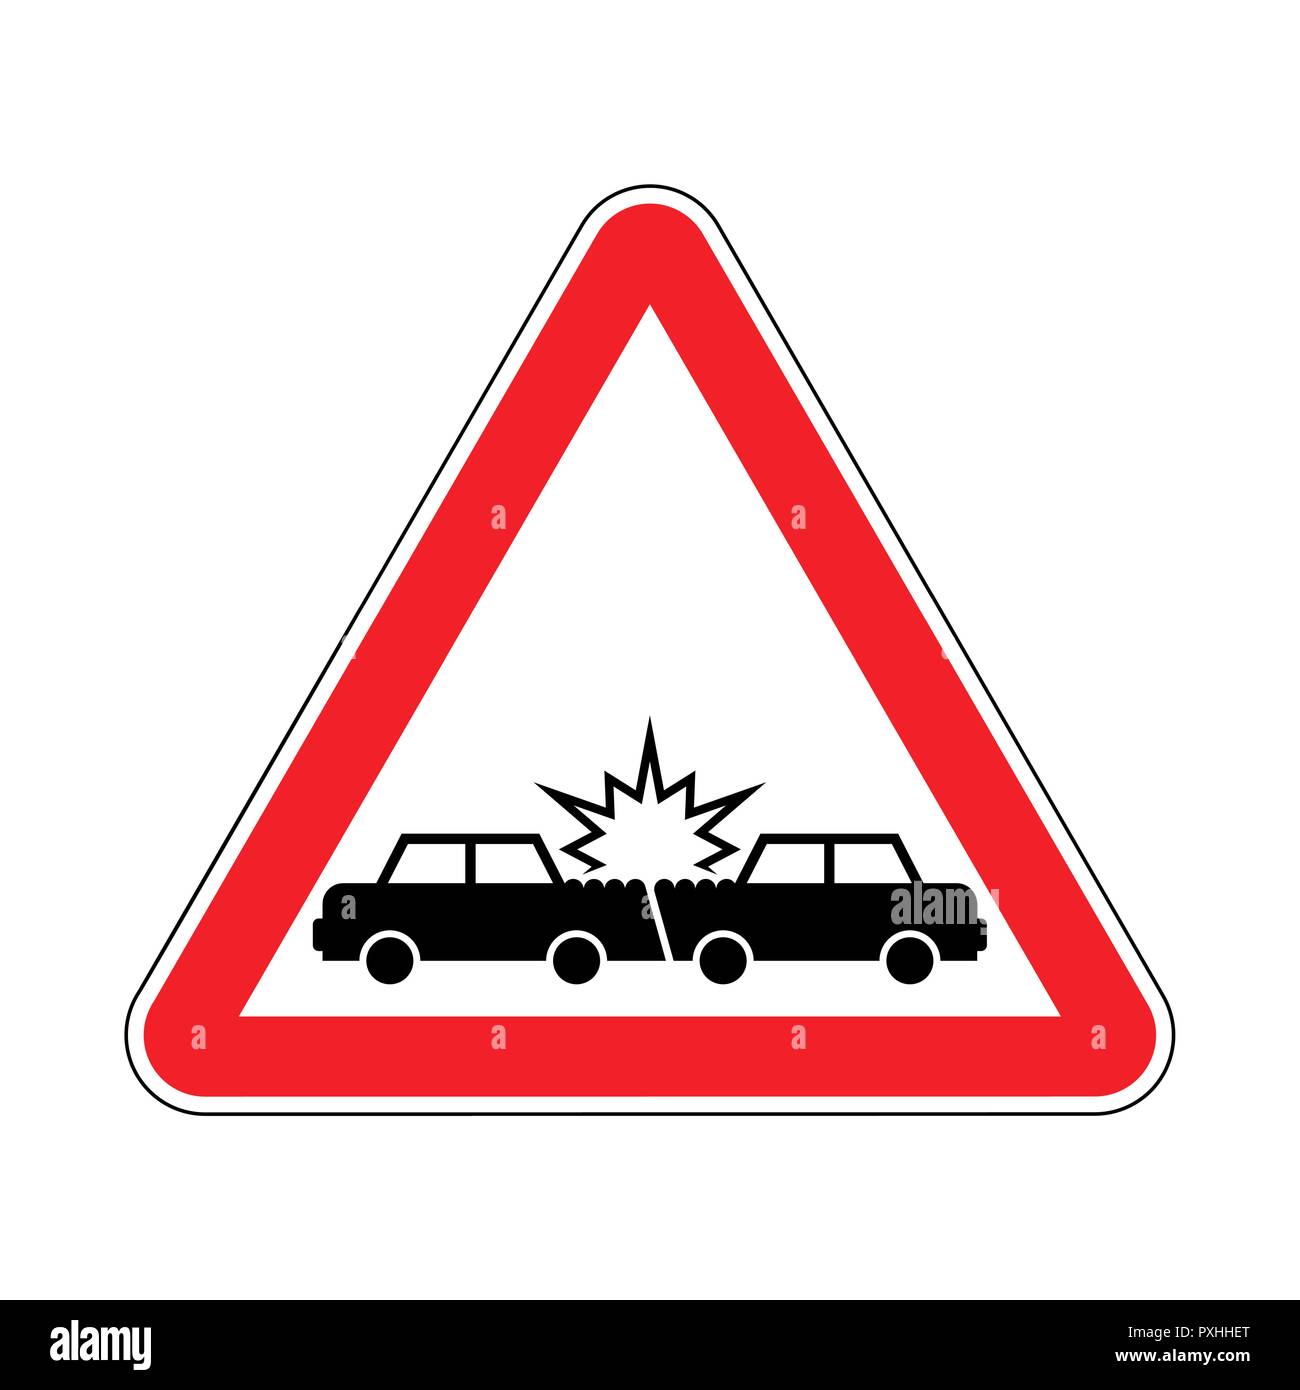 Attention Car crash. Caution Accident cars. Transportation wreck symbol. Red Danger road sign. Stock Vector